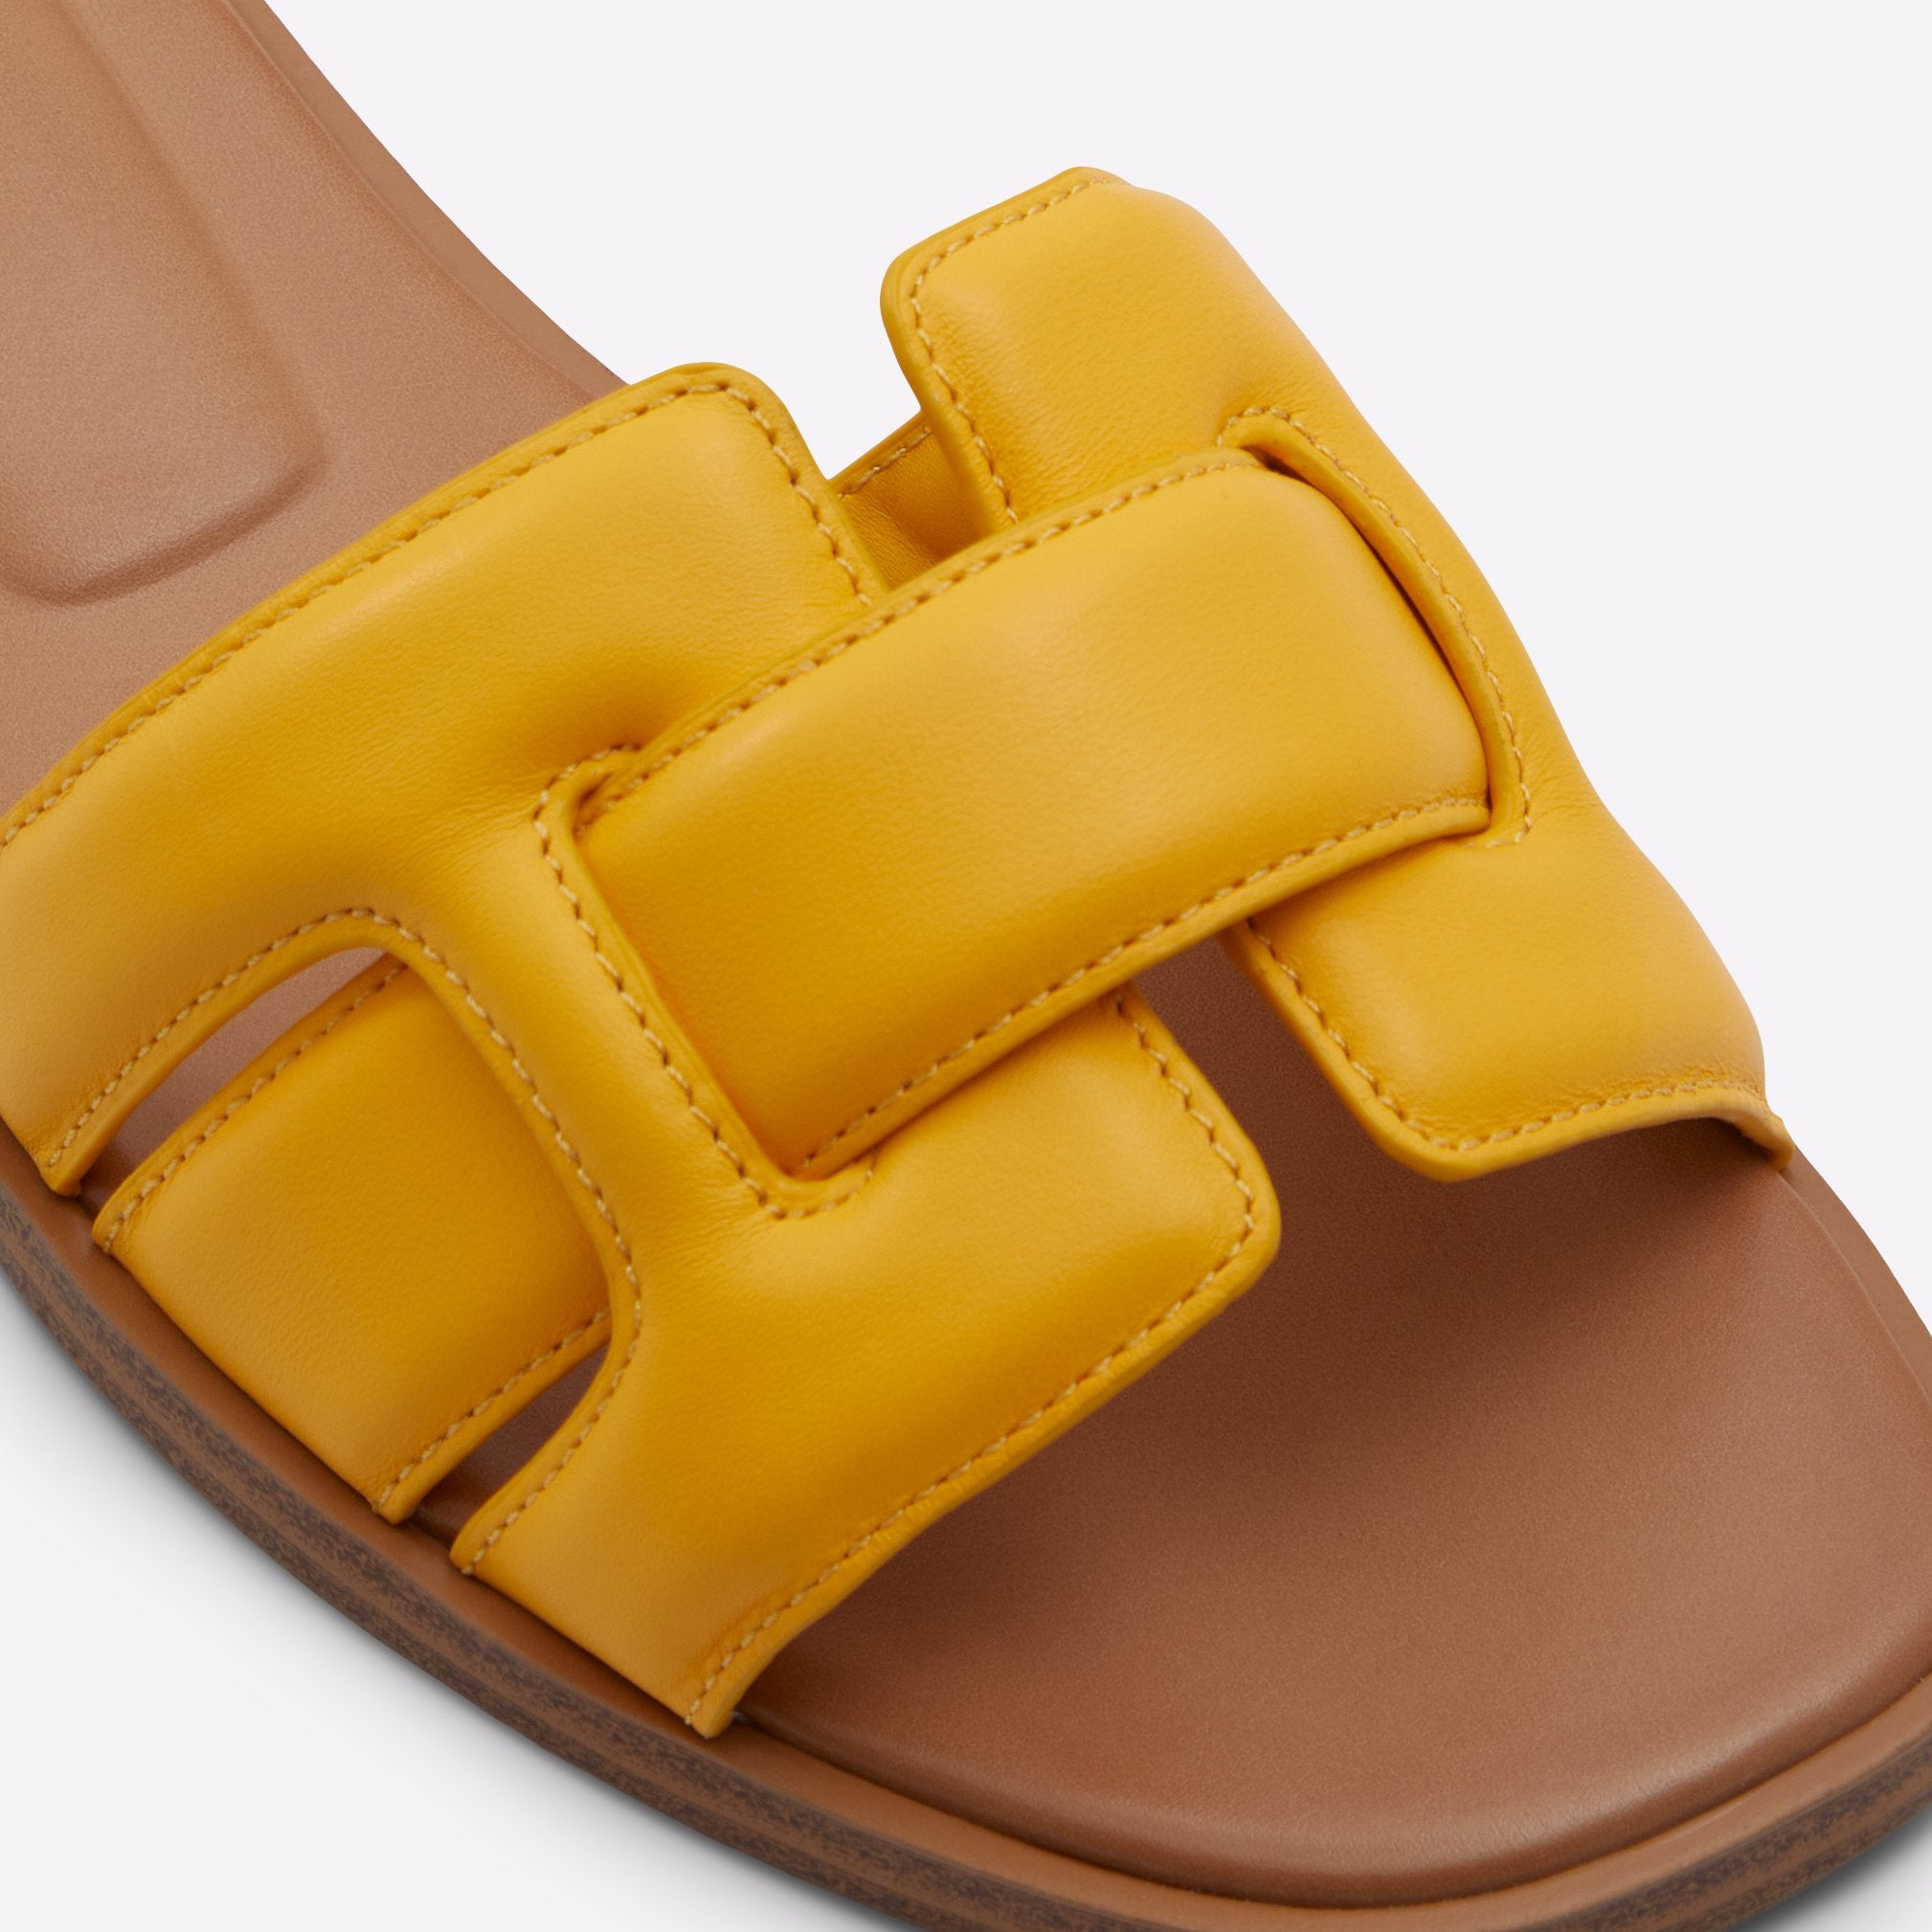 Elenaa / Flat Sandals Women Shoes - Bright Yellow - ALDO KSA